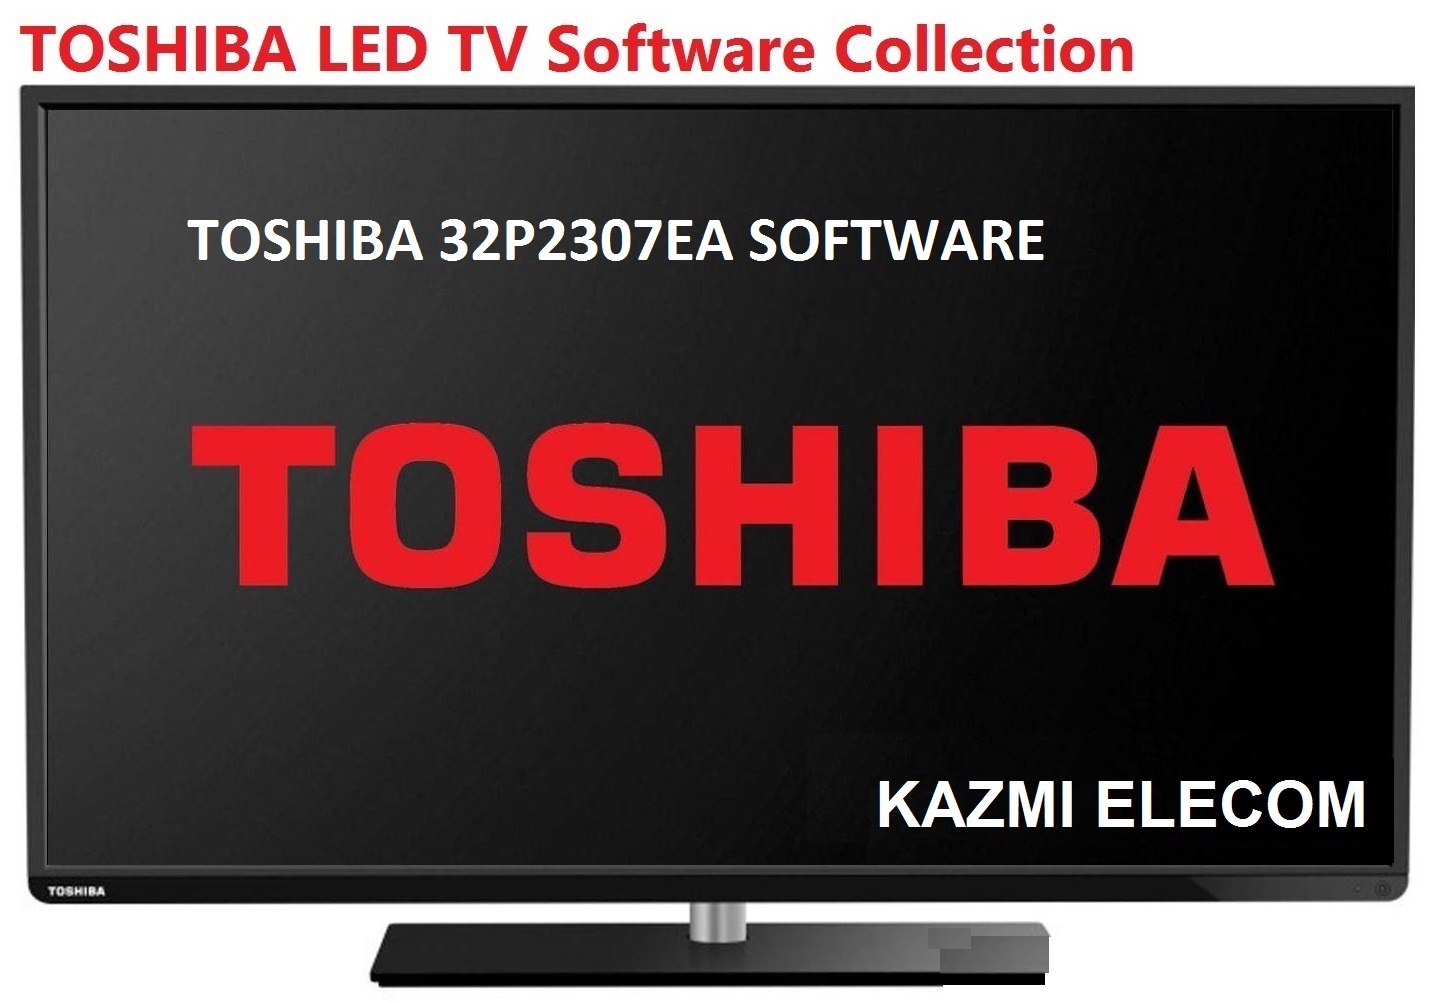 Toshiba 32P2307Ea